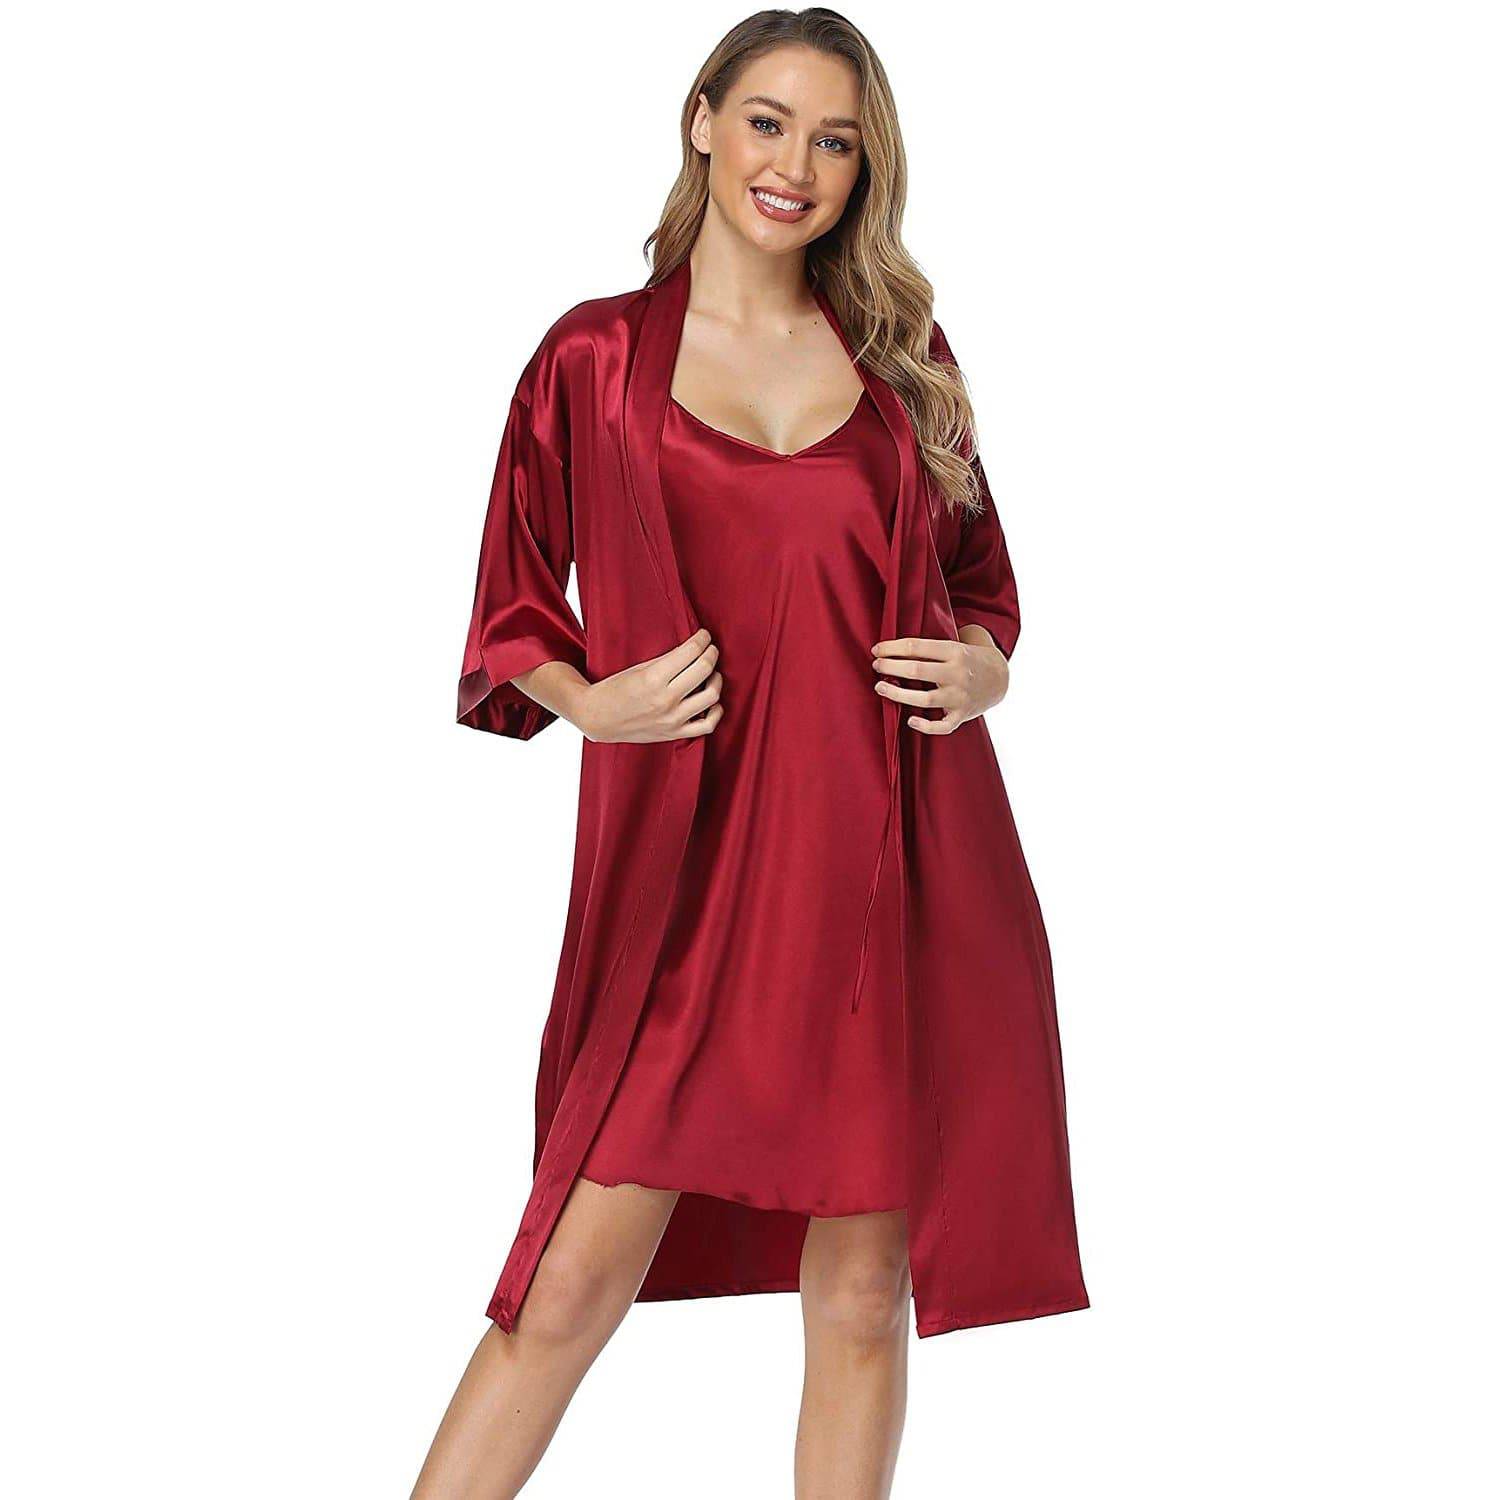 Women Lace Passion Lingerie Plus Size Dress Nightwear Dress silk pajamas  for women